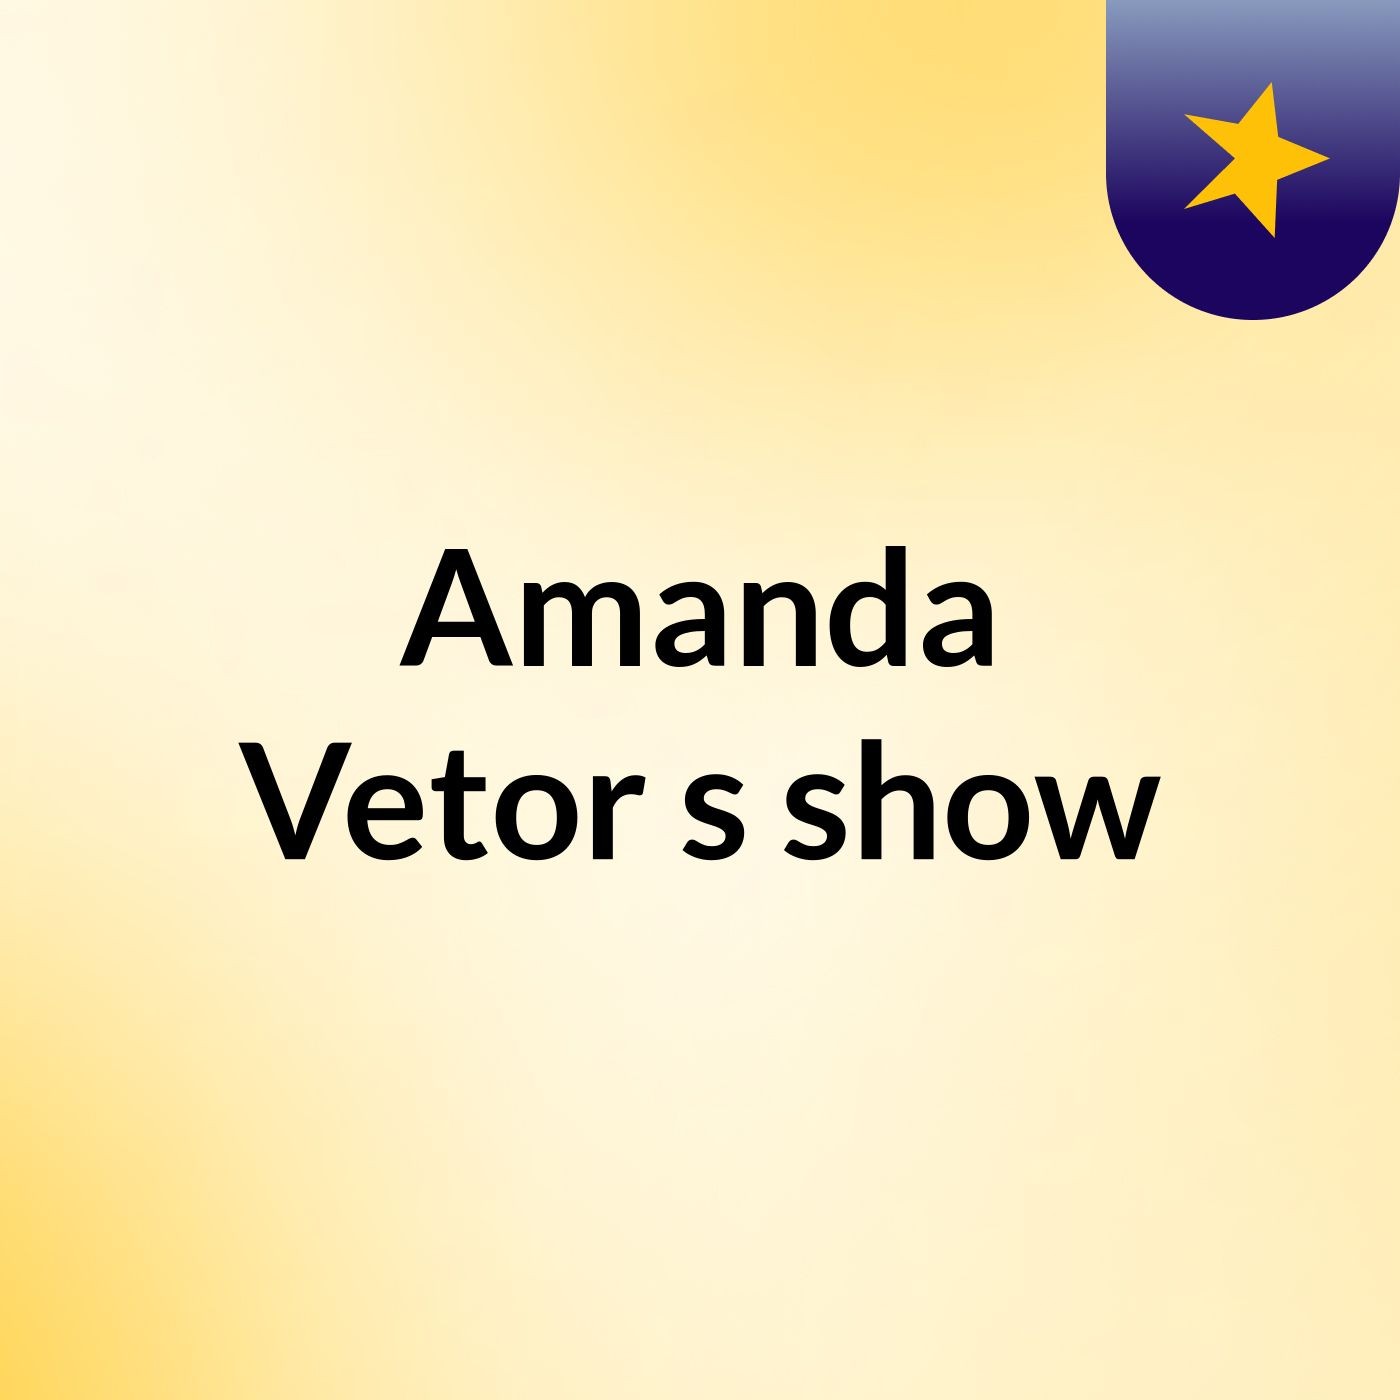 Amanda Vetor's show